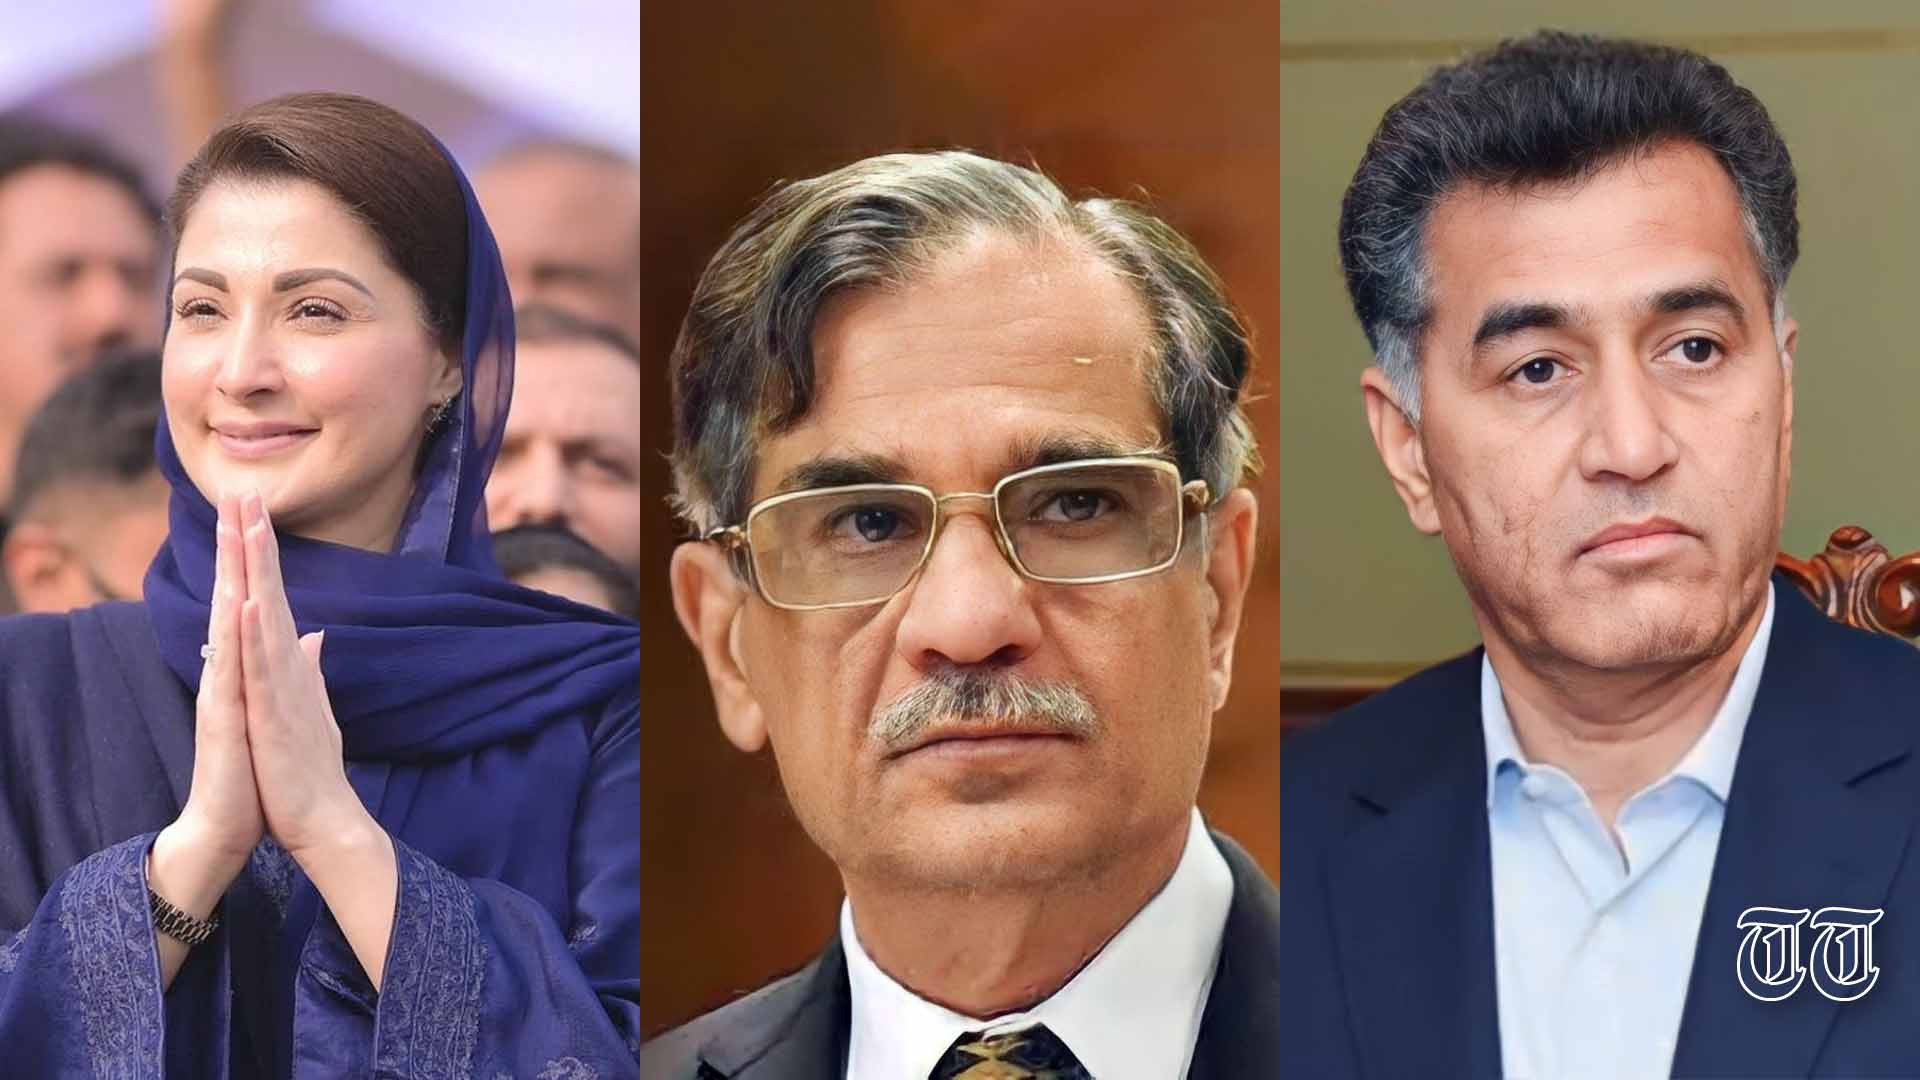 L to R shows PML(N) senior vice president Maryam Nawaz, former chief justice Saqib Nisar, and former DG ISI Faiz Hameed.